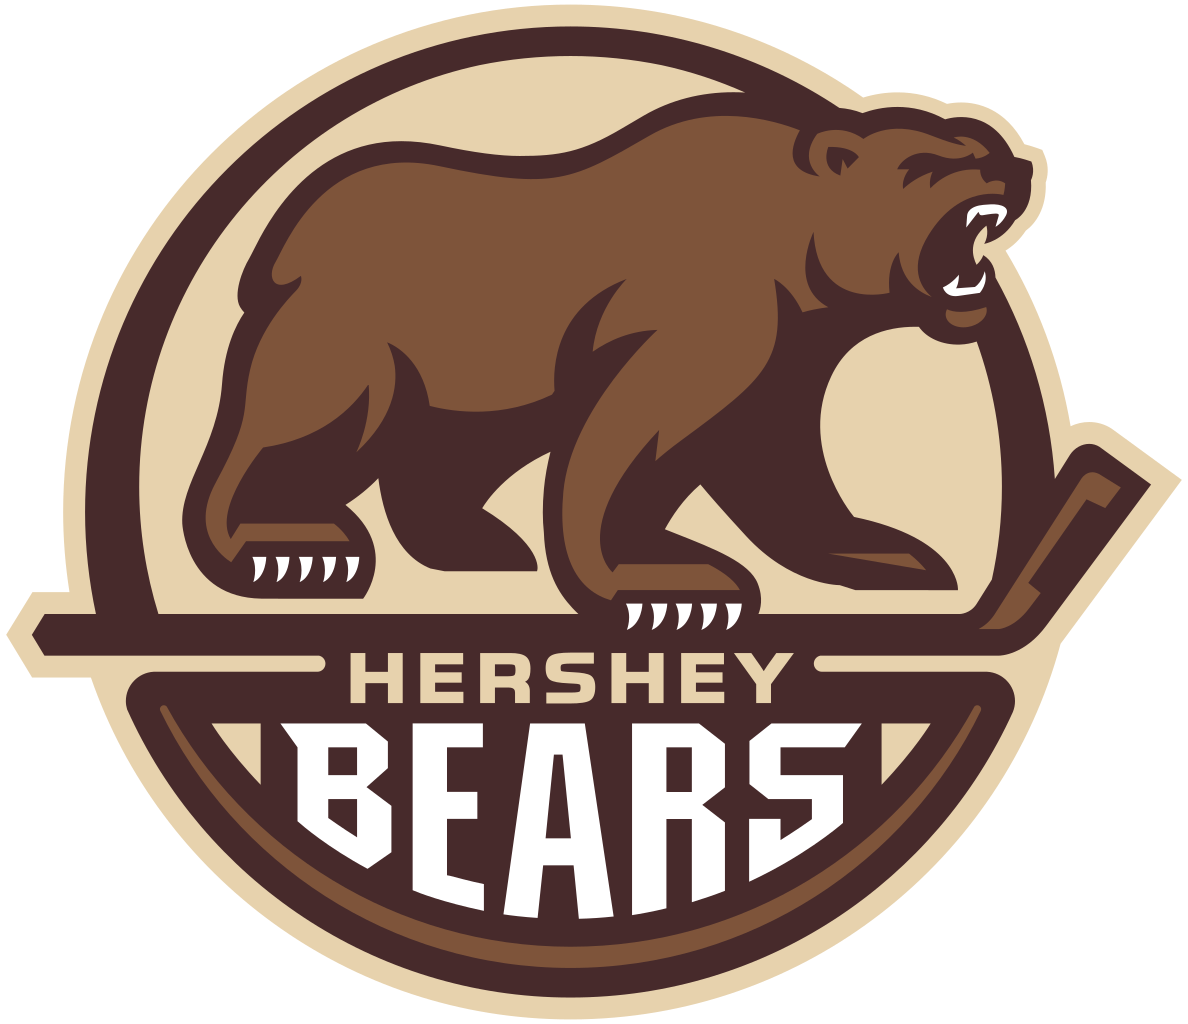 Hershey_Bears_logo.svg.png